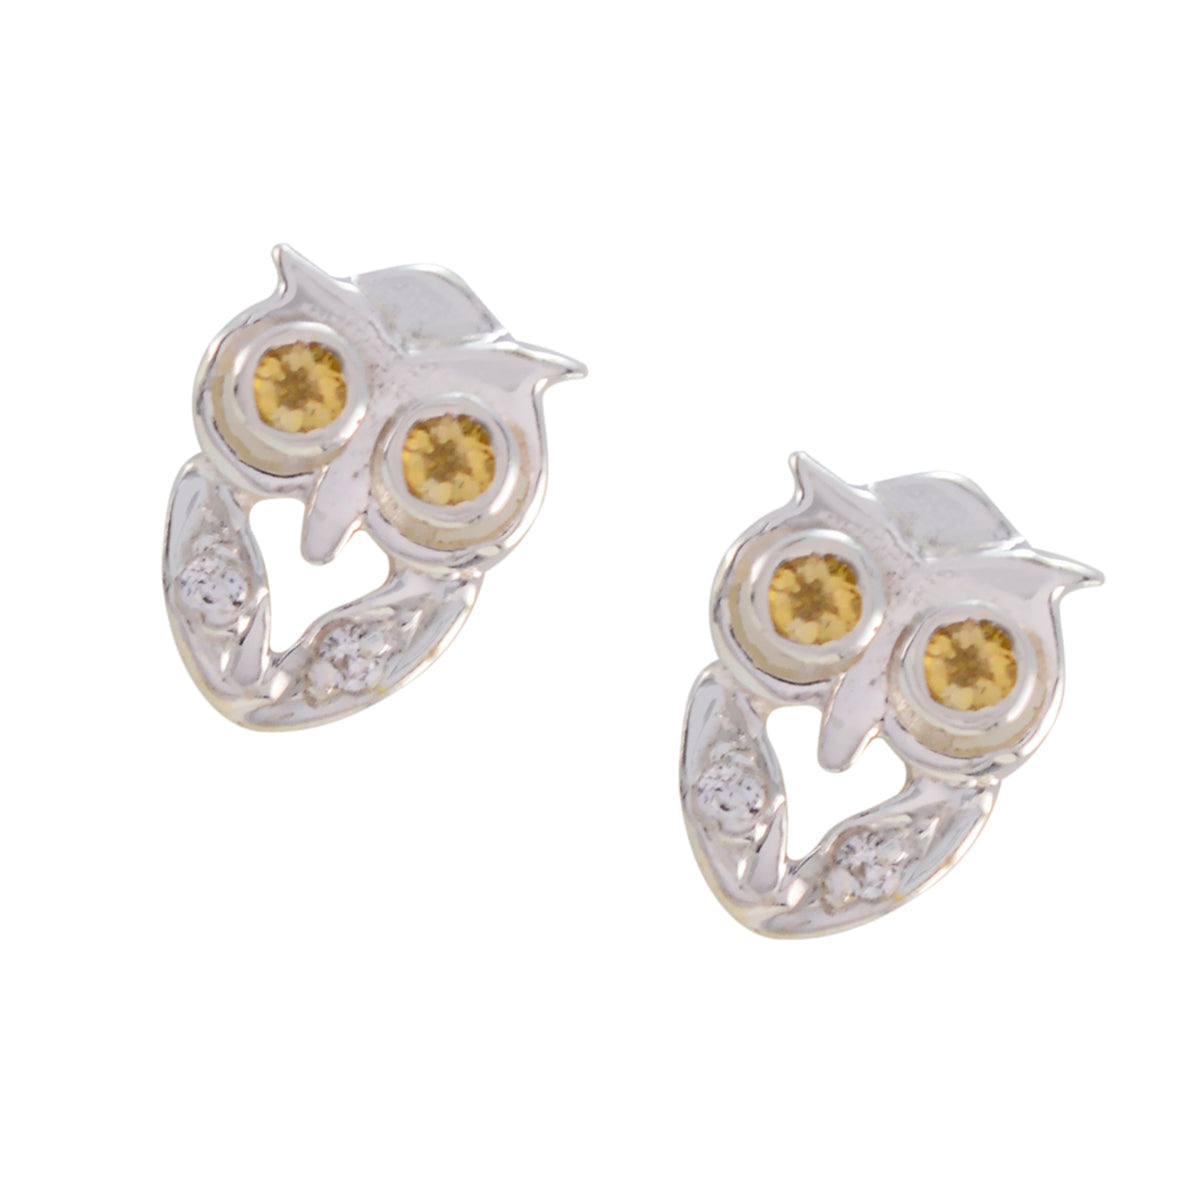 Riyo Sightly 925 Sterling Silber Ohrring für Damen Citrin Ohrring Lünette Fassung gelb Ohrring Ohrstecker